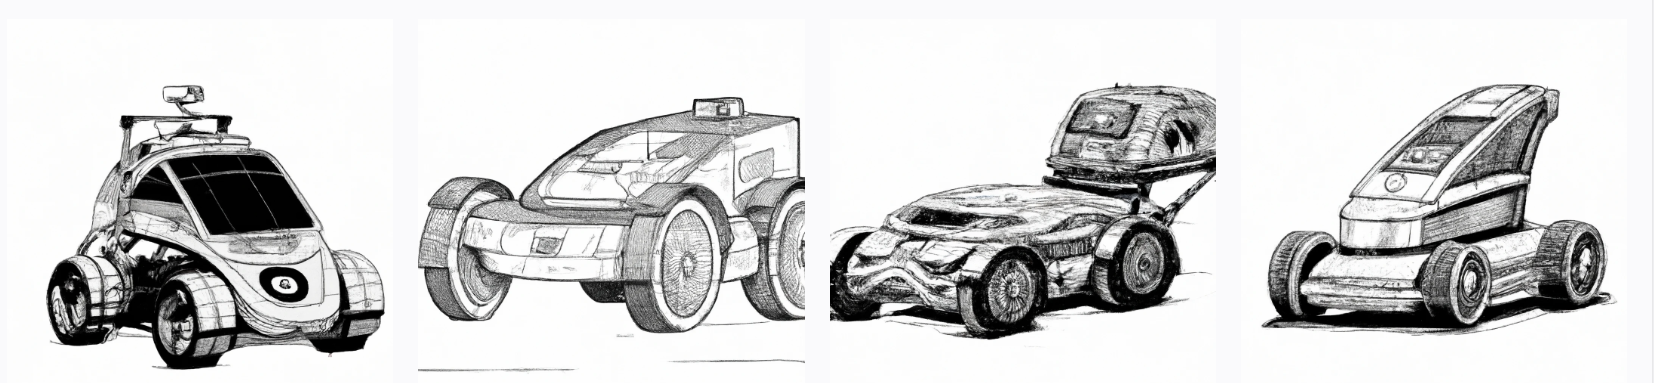 4 wheeled robot driverless trolley, sketch style car design, digital art